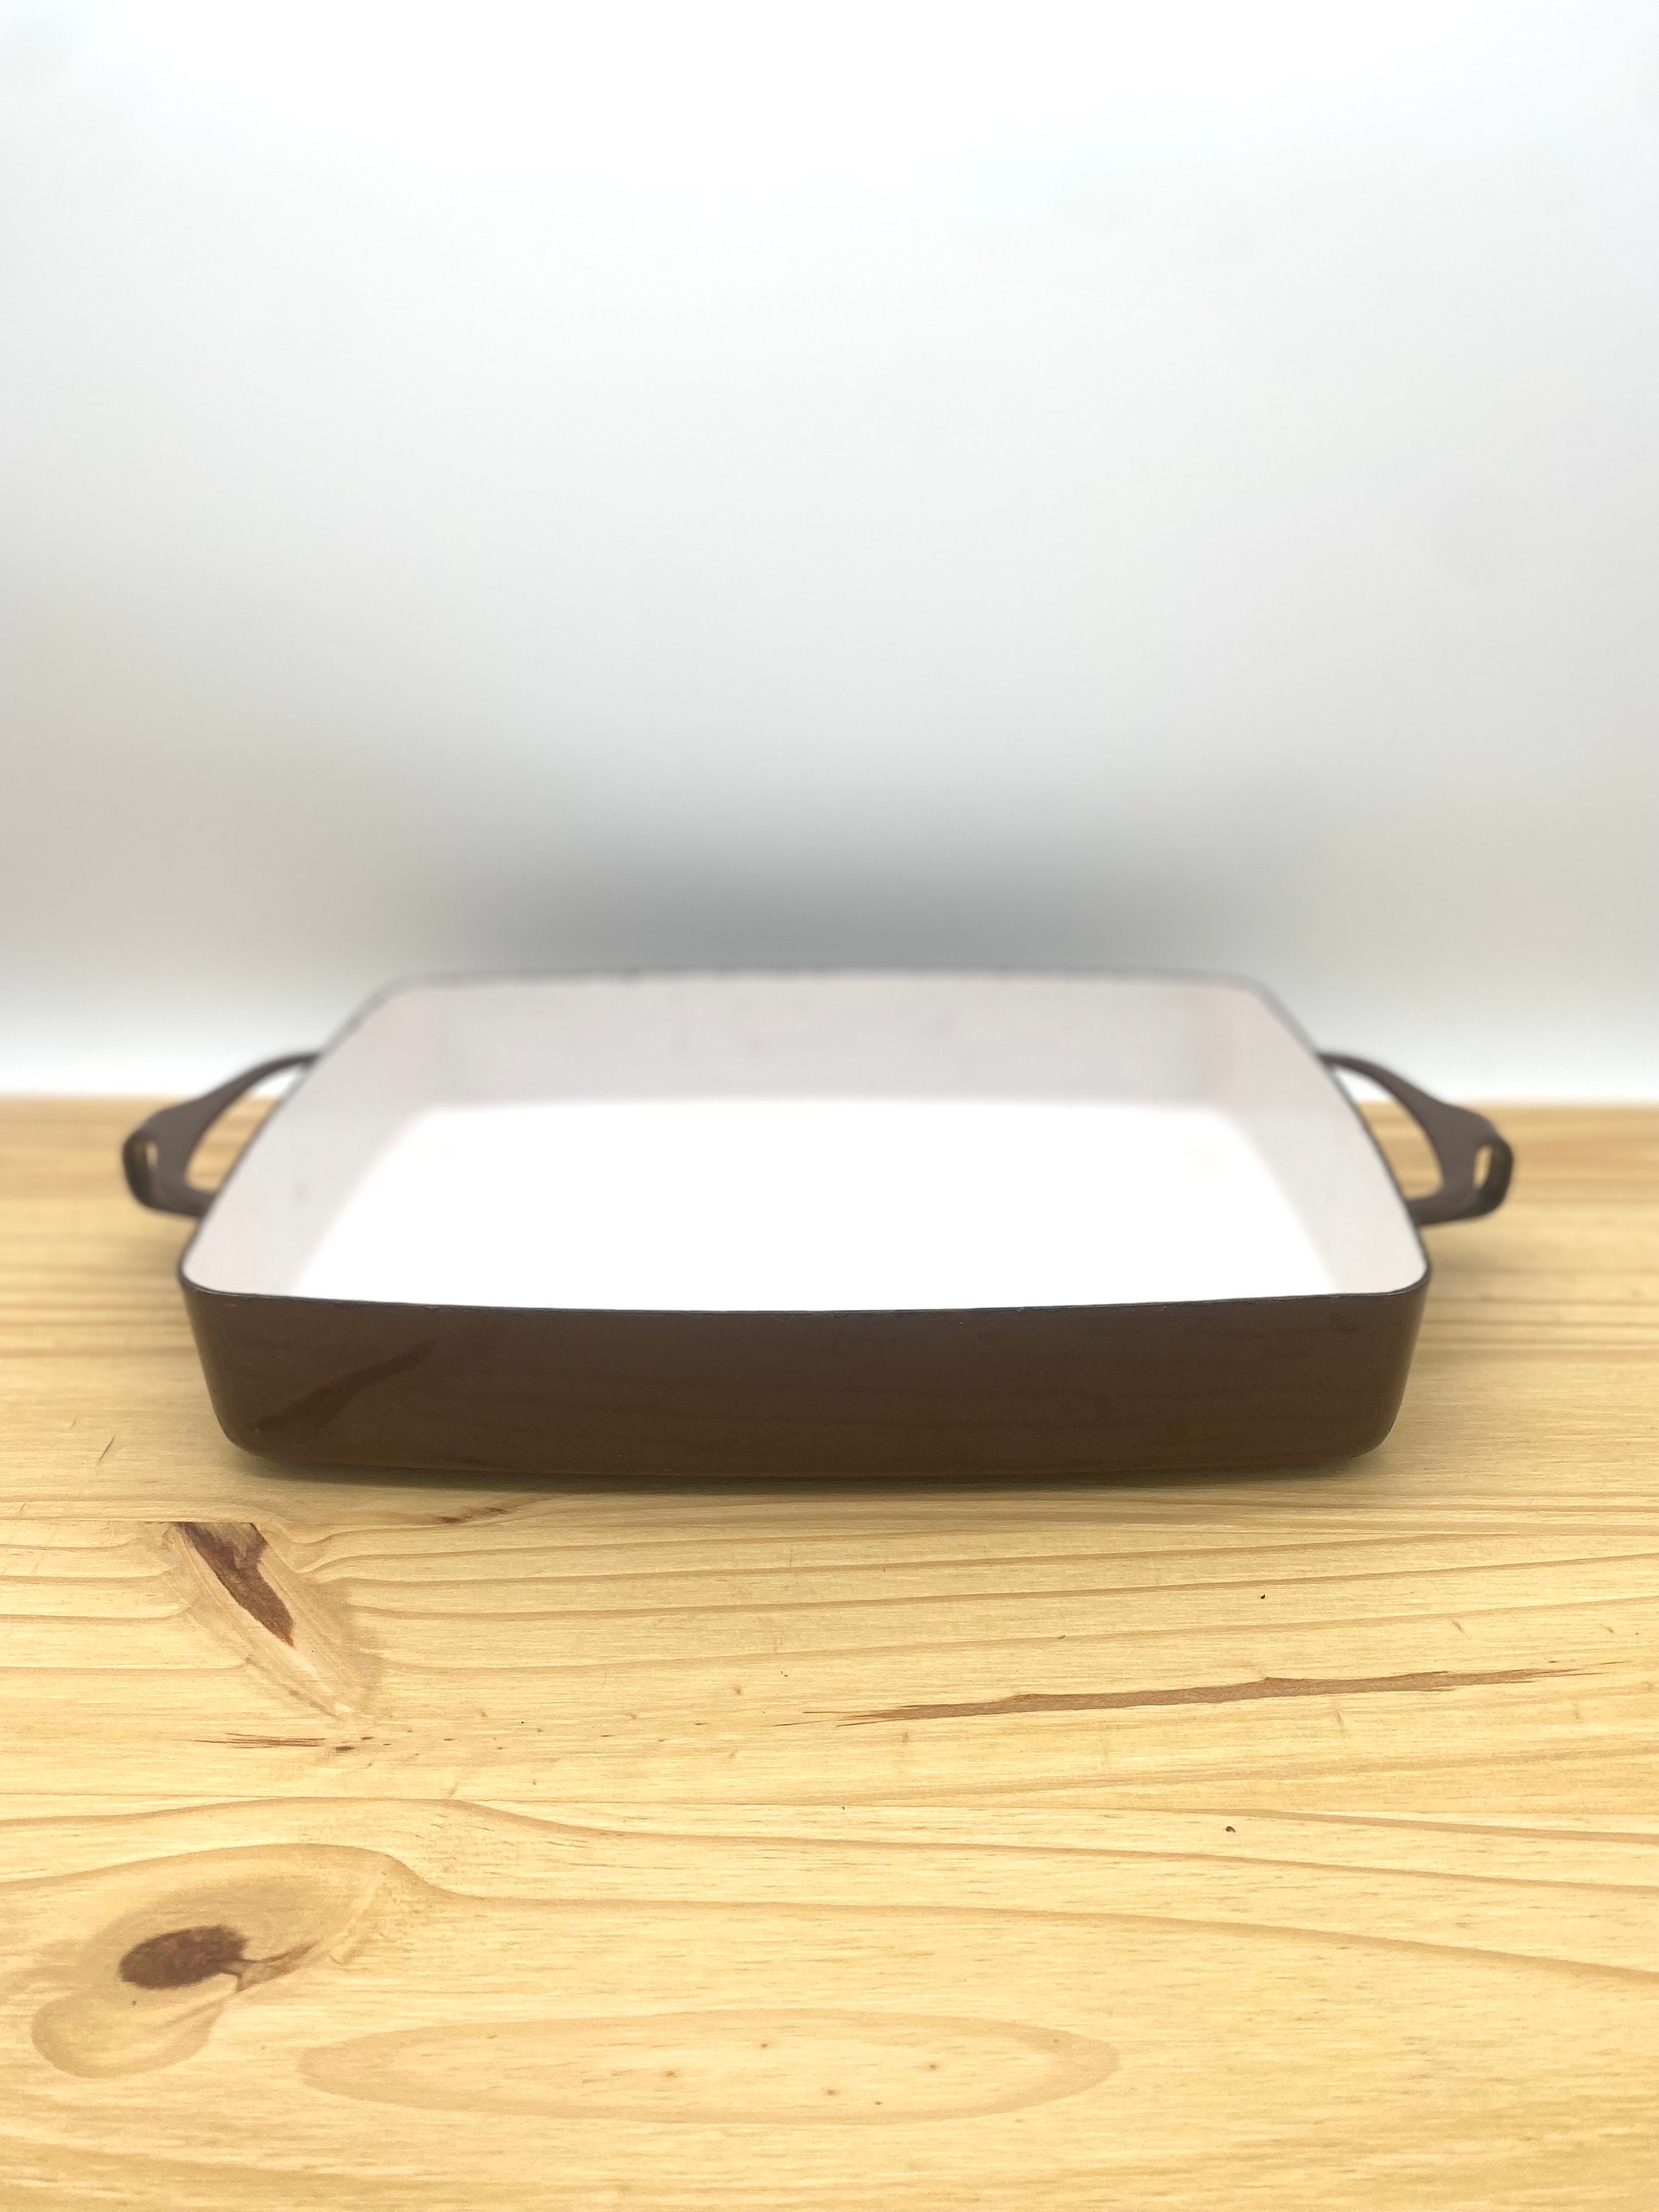 34x 25cm Cast Iron rectangular Roasting Dish, Lasagna Pan with Internal  Matte Black Enamel Coating, and Red Enamel Coating Exterior Finish. – La  Cuisine